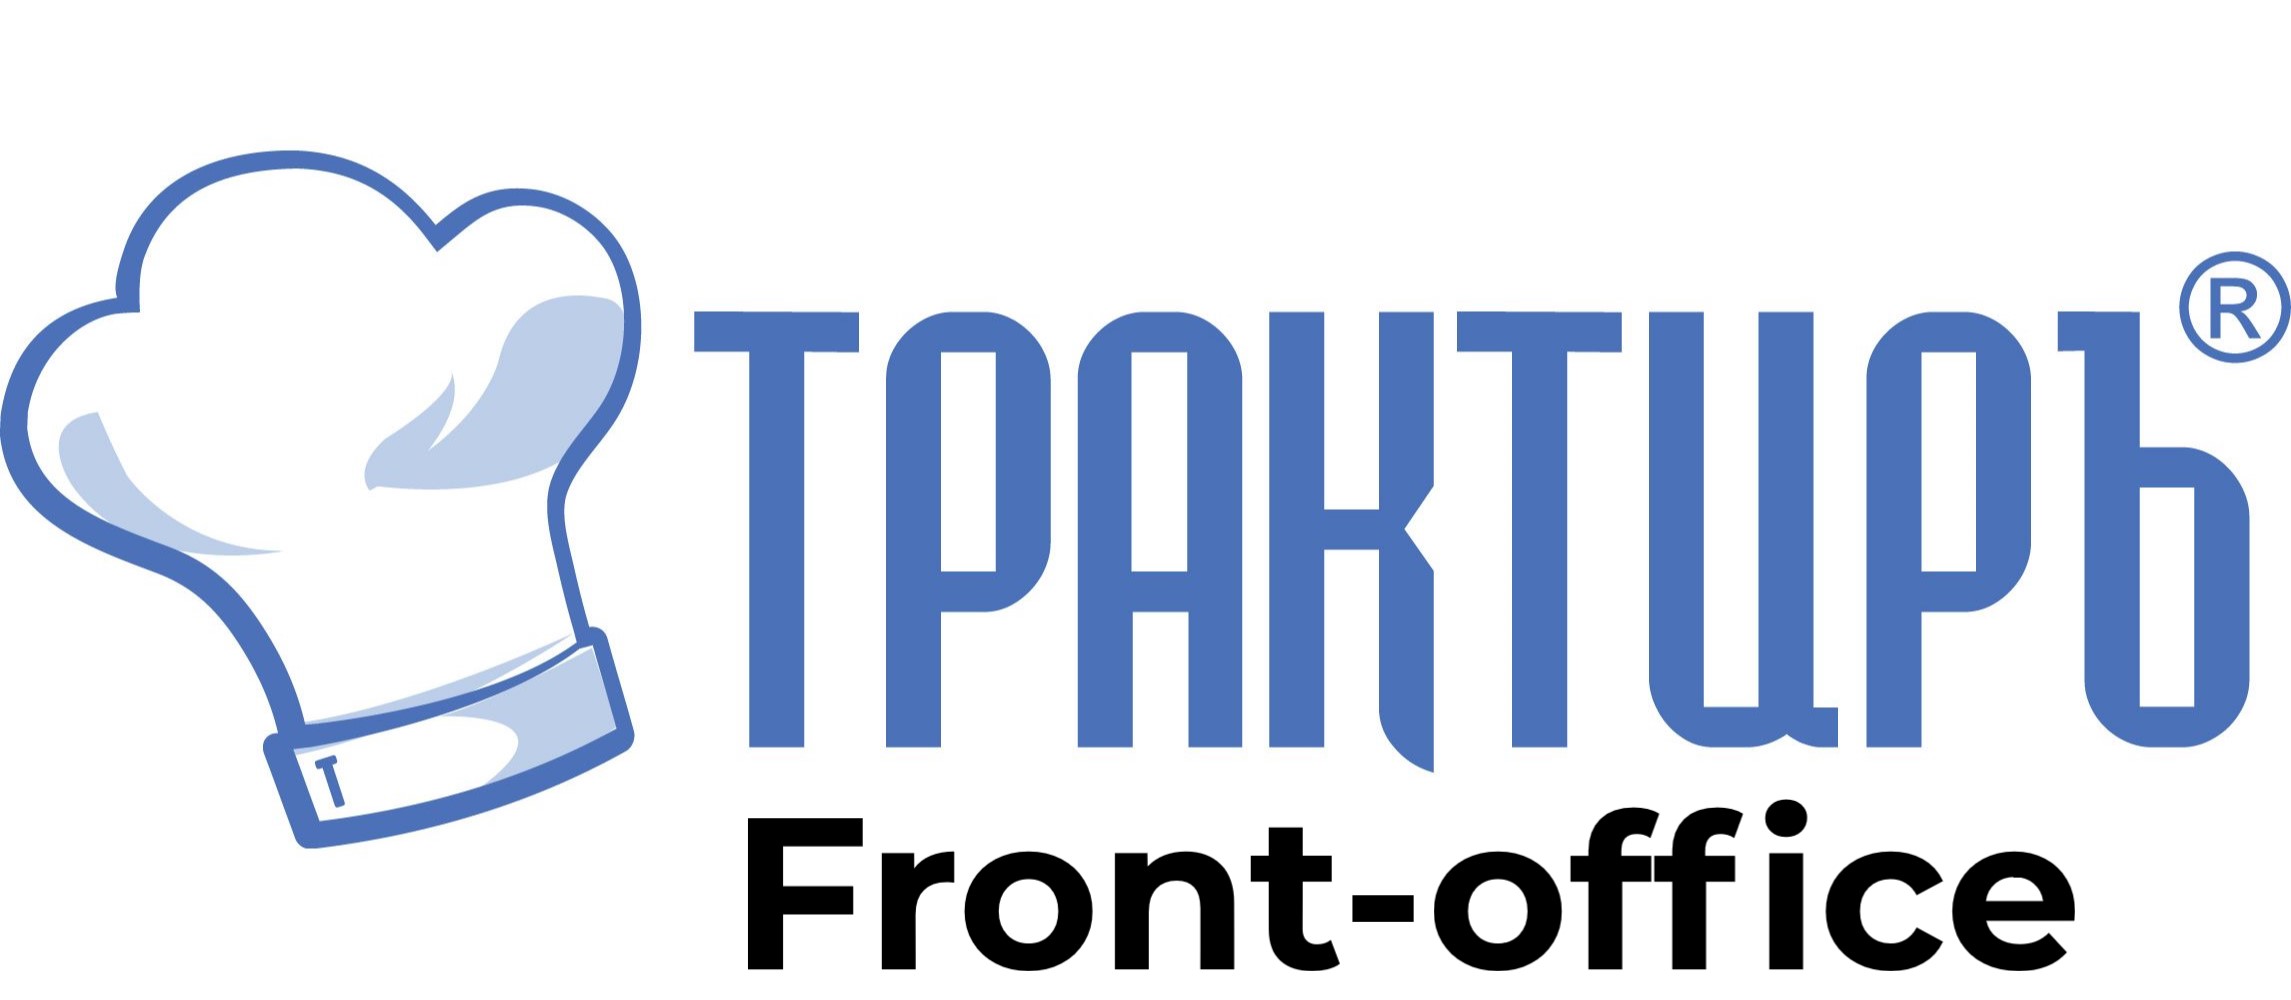 Трактиръ: Front-Office v4.5  Основная поставка в Пскове